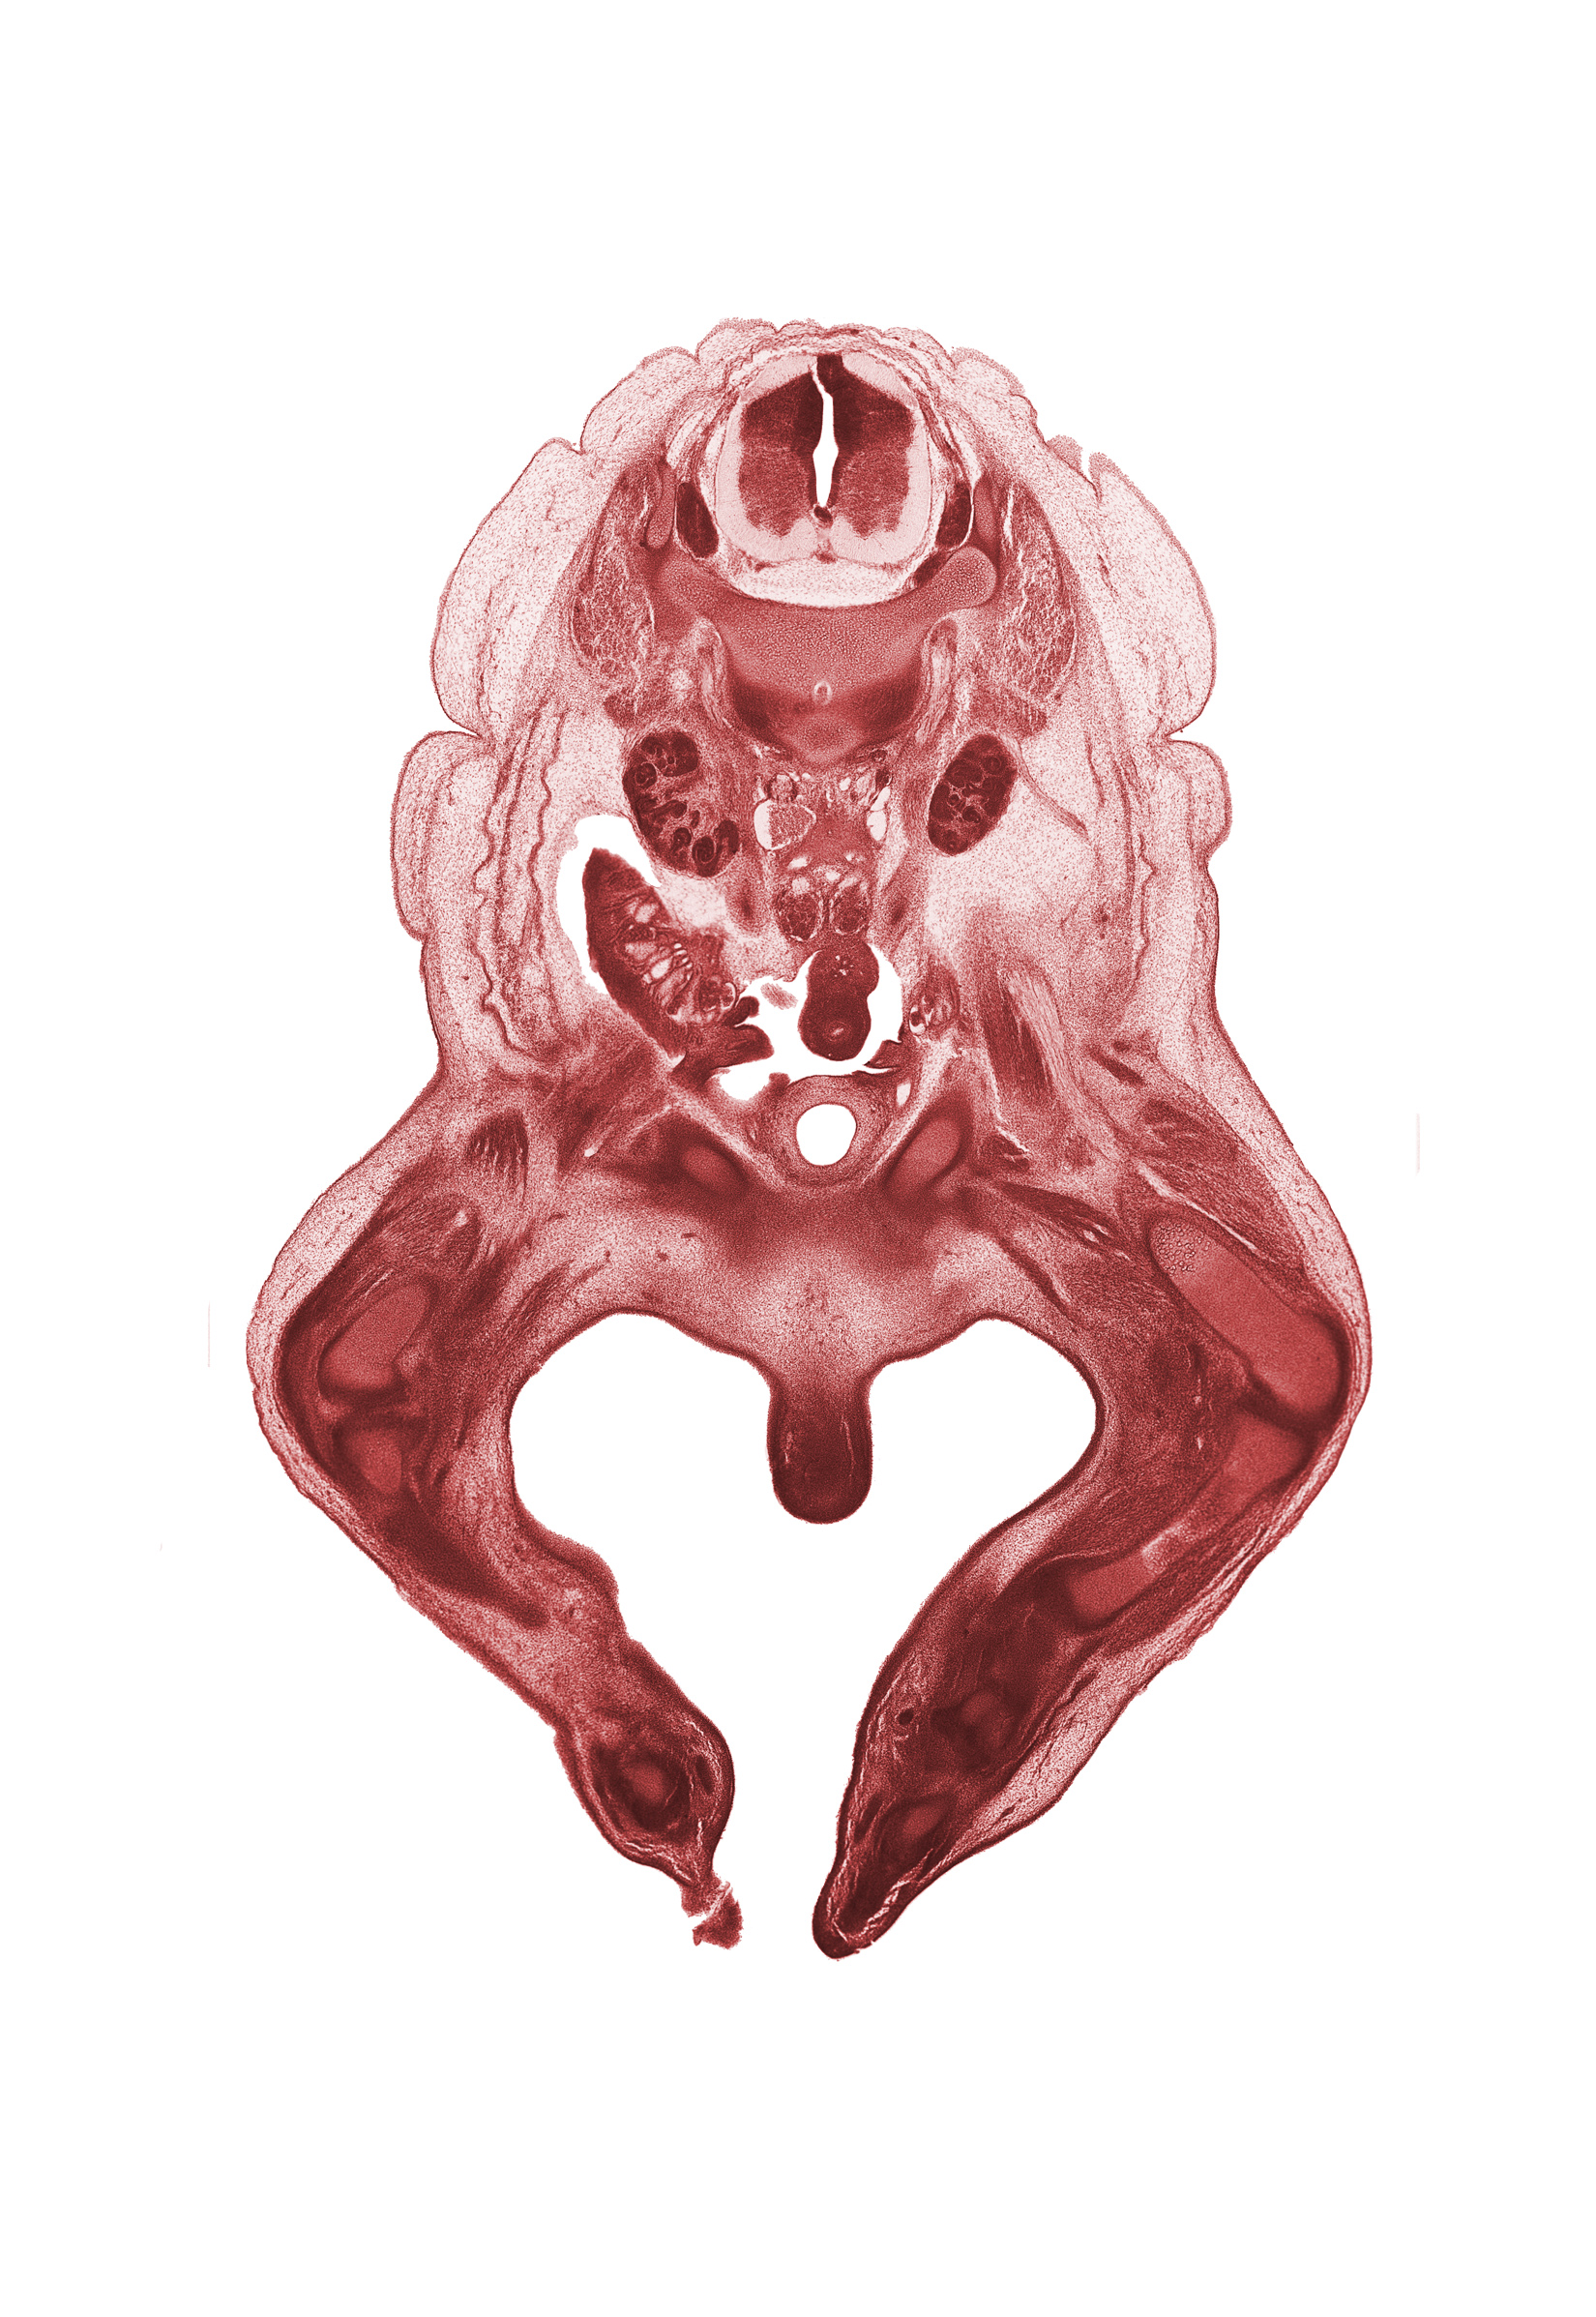 L-1 spinal ganglion, L-2 spinal ganglion, artifact fracture(s), clitoris, femoral nerve, femur, hindgut, kidney (metanephros), knee joint, labial swelling (labium major), median sacral artery, metatarsal(s), patella, psoas major muscle, pubis, quadriceps femoris muscle, right common iliac artery, tarsal region, tibia, ureter